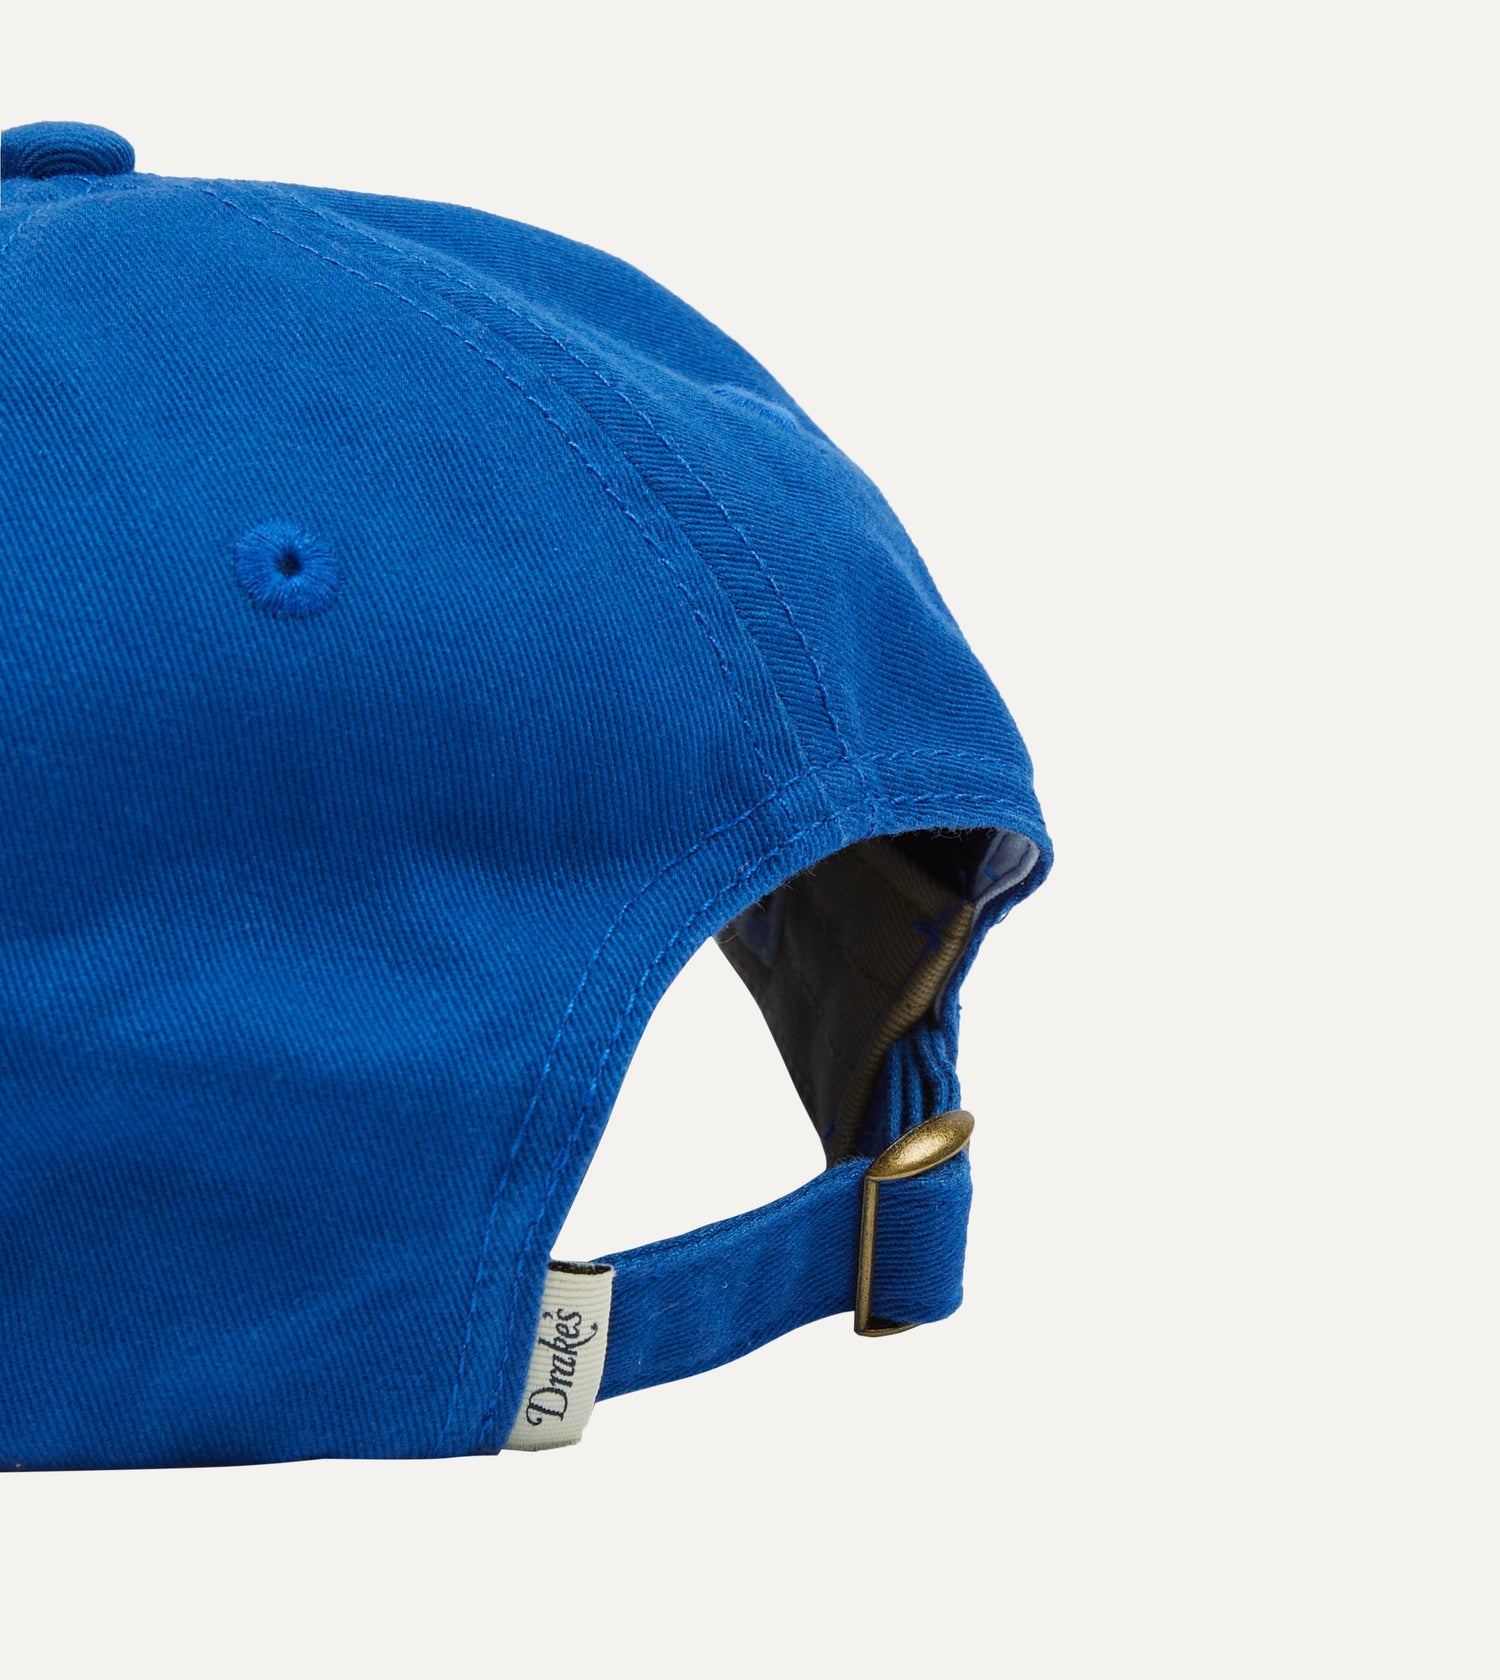 ALD / Drake's Blue Chino Hat